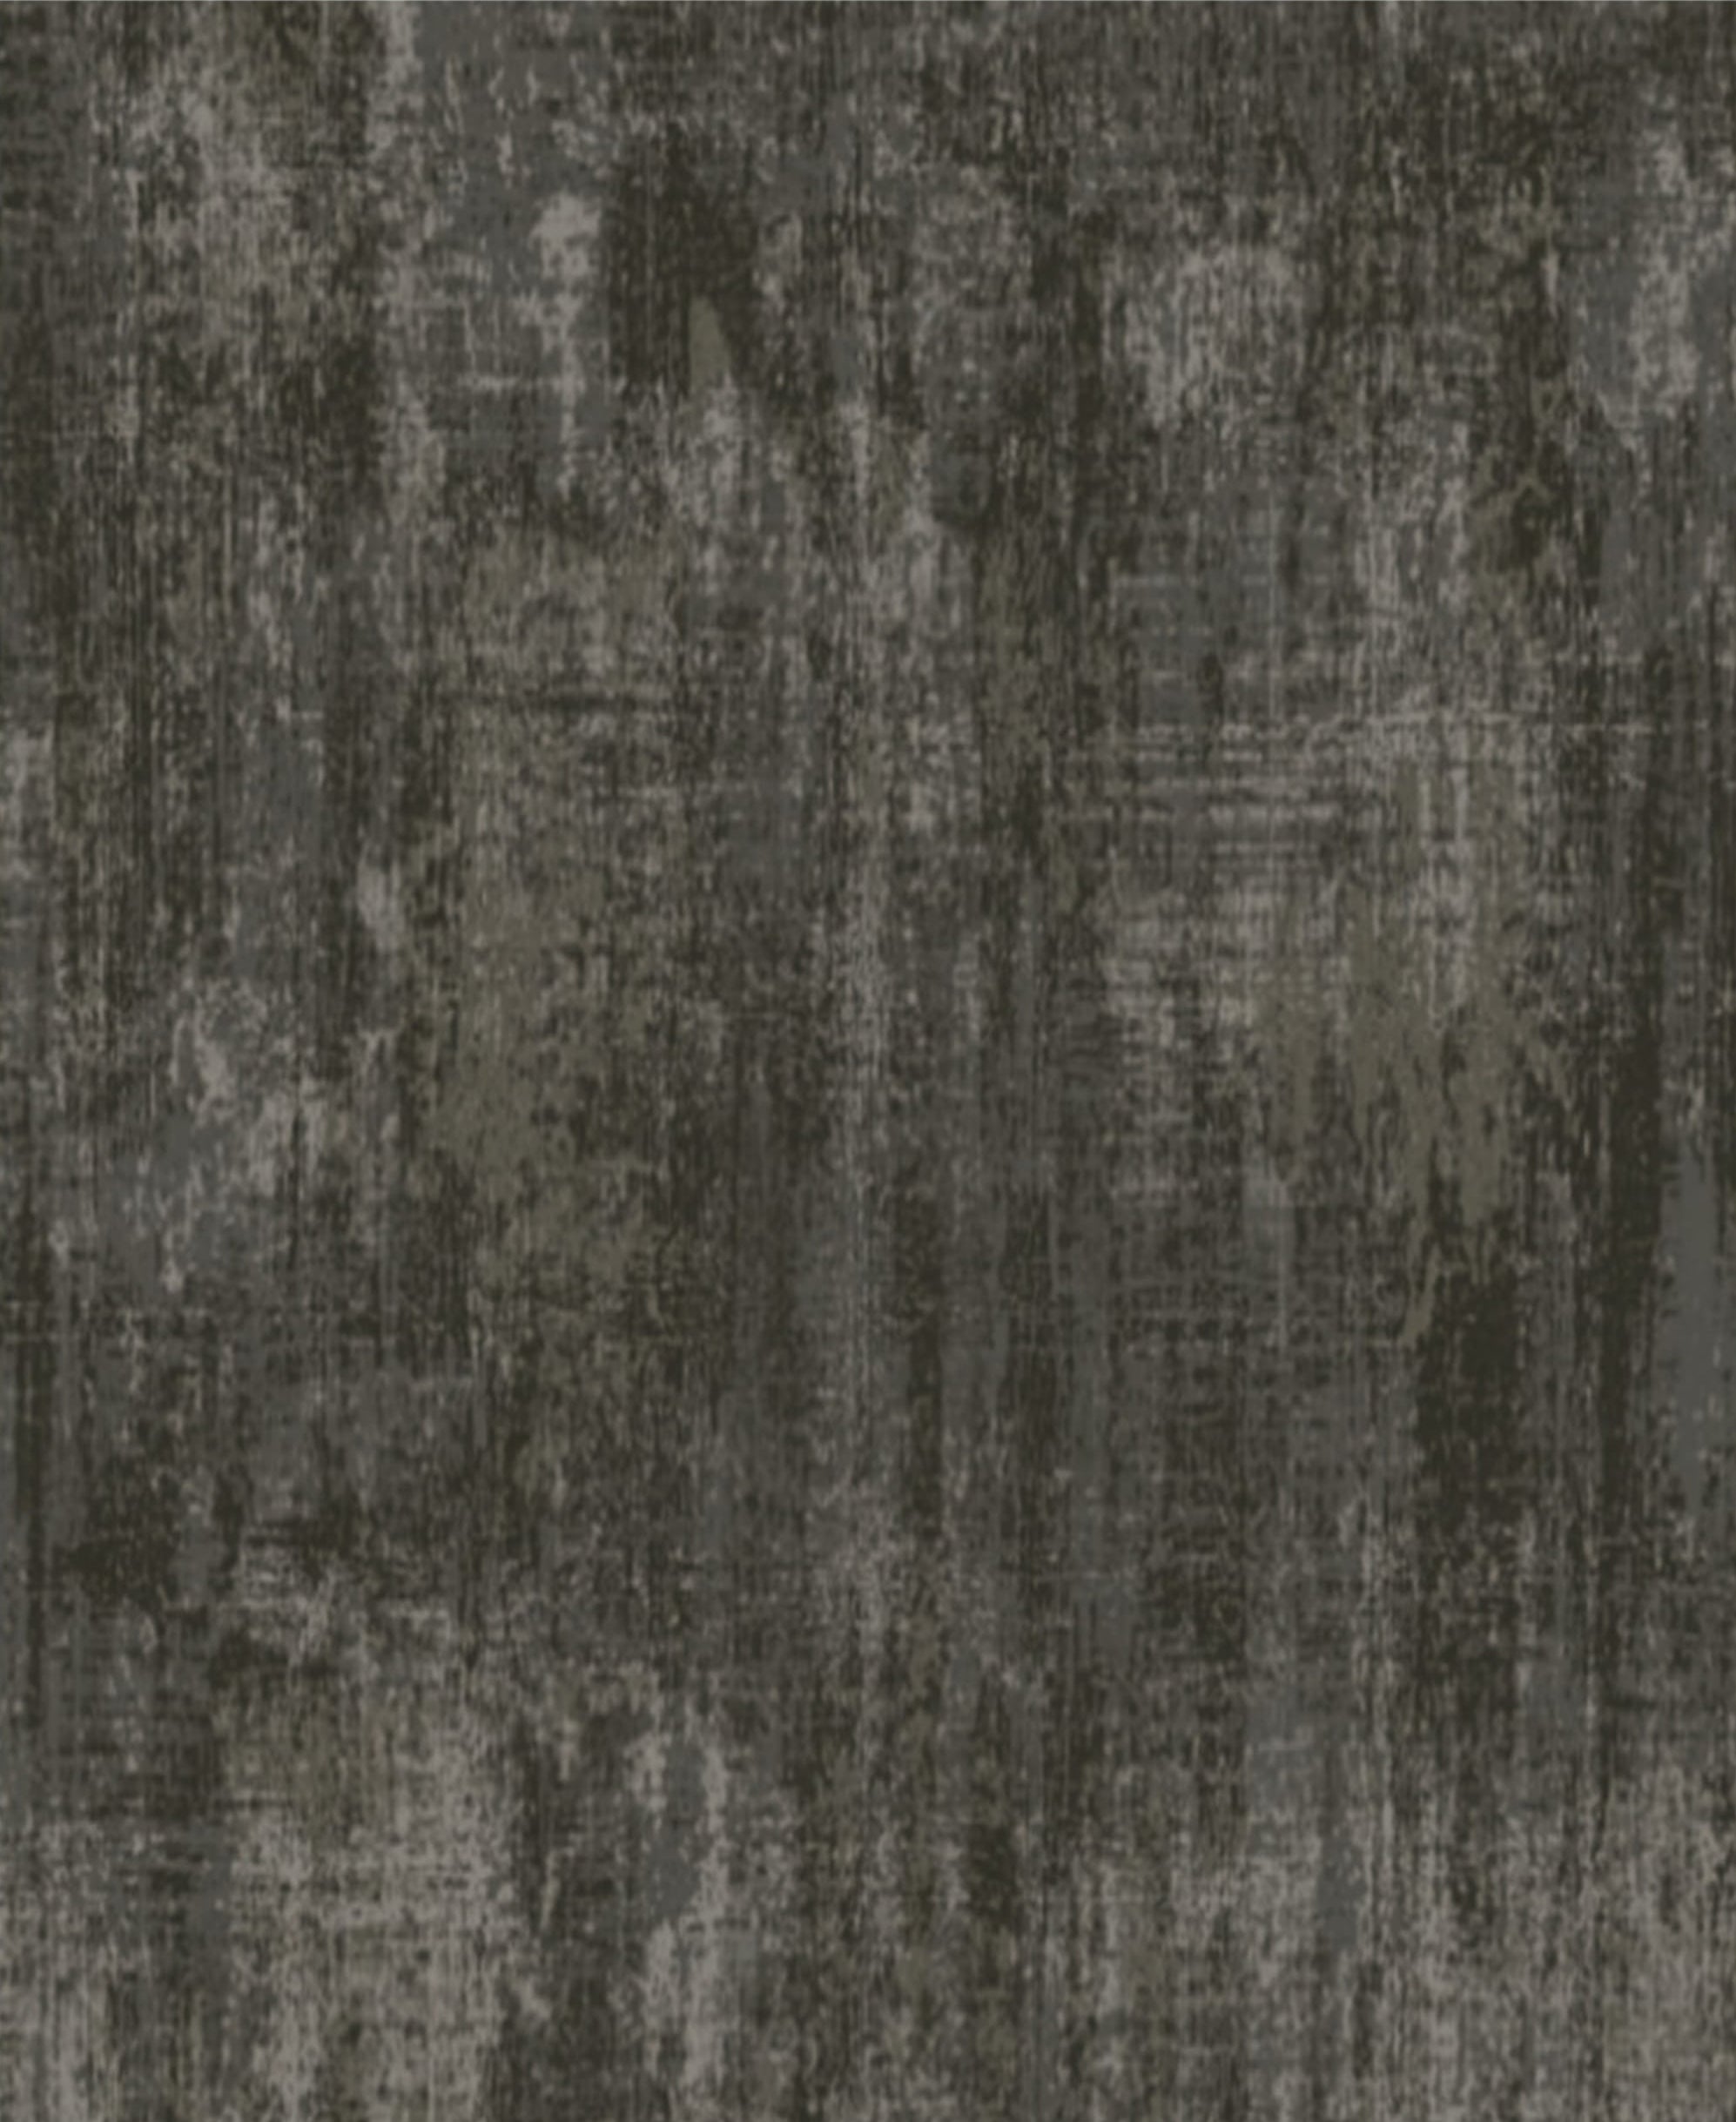 Galerie Organic Textures Distressed Brick Wallpaper  G67989  Grey   Terracotta